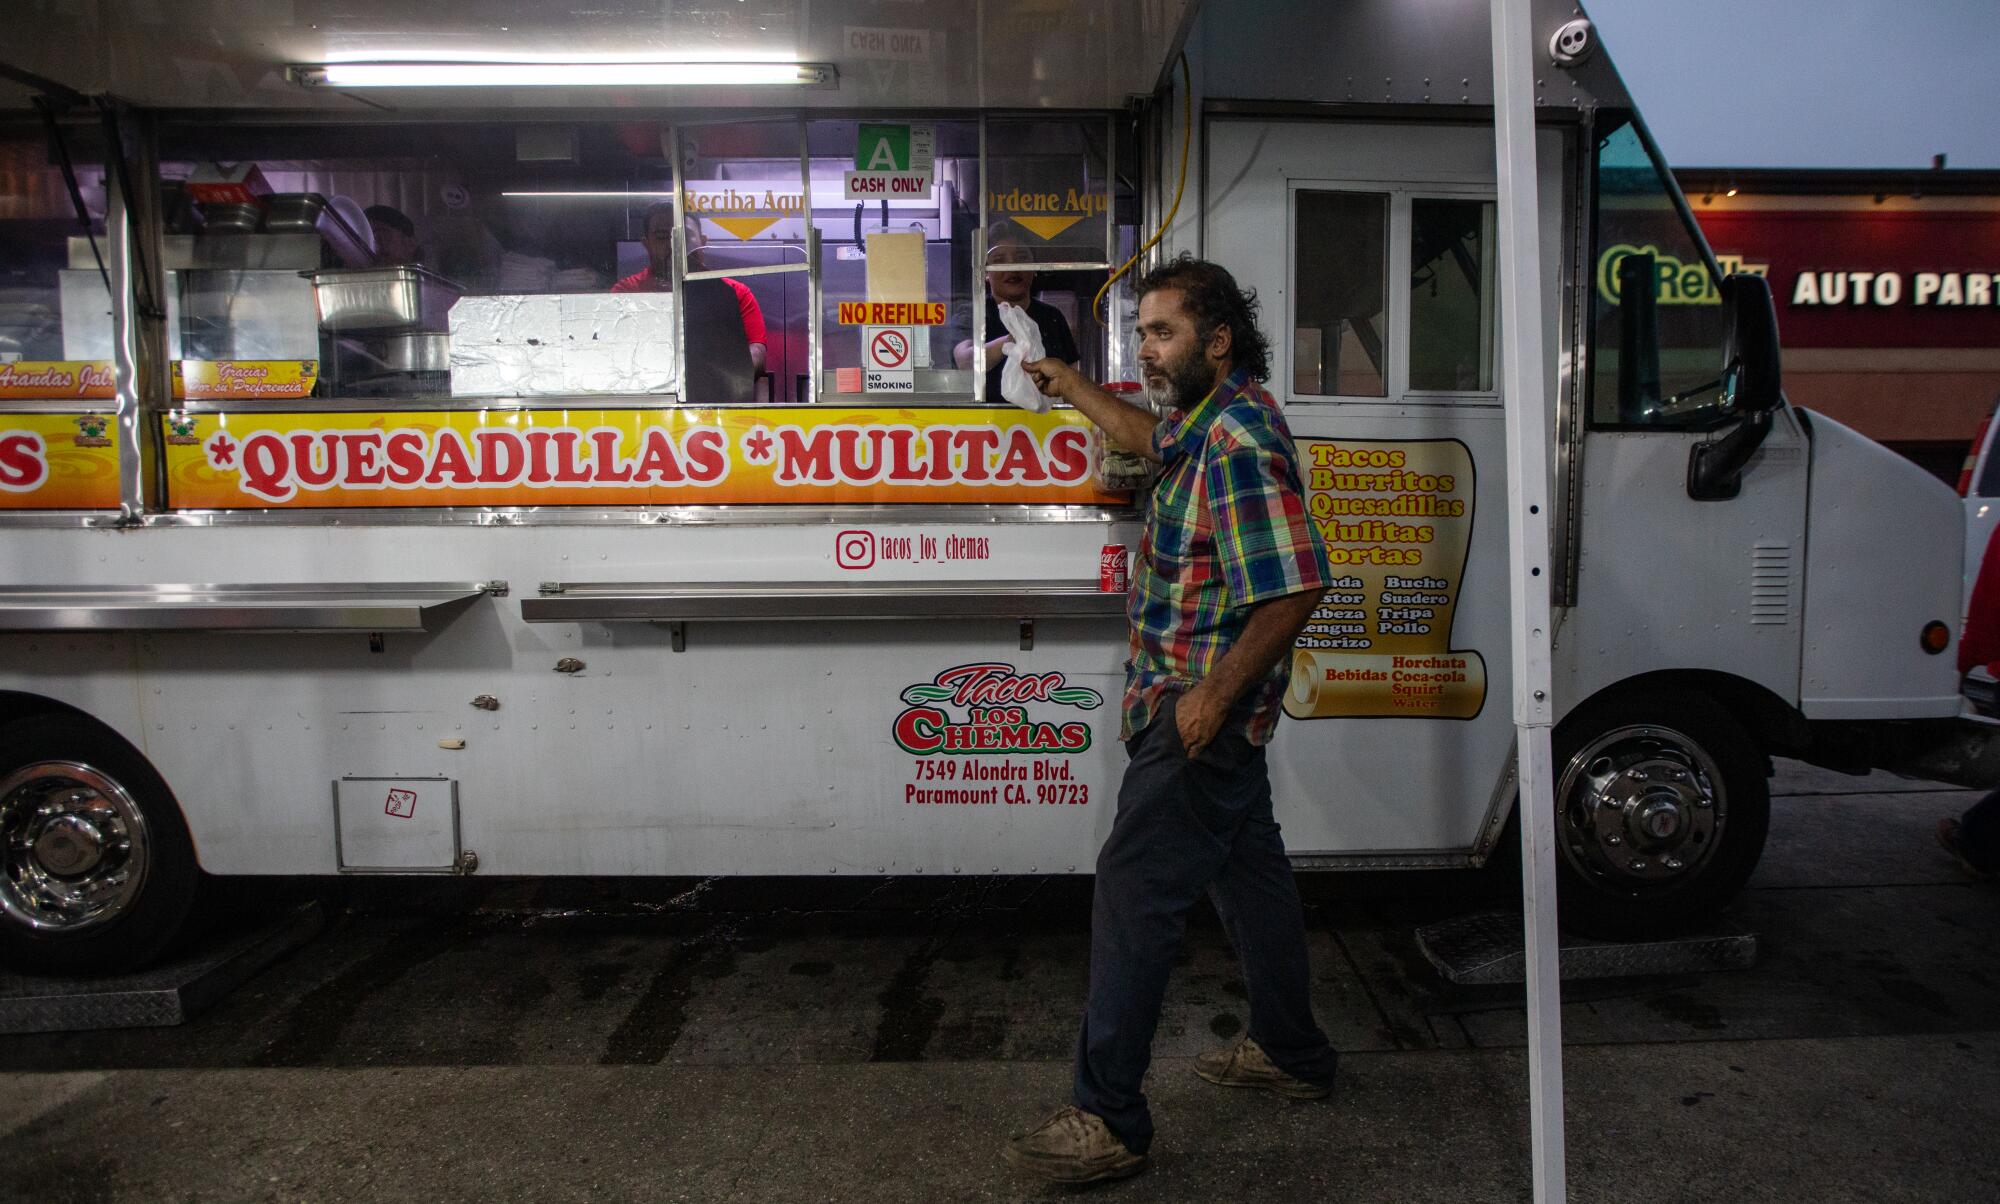 The Tacos Los Chemas food truck was robbed May 28.